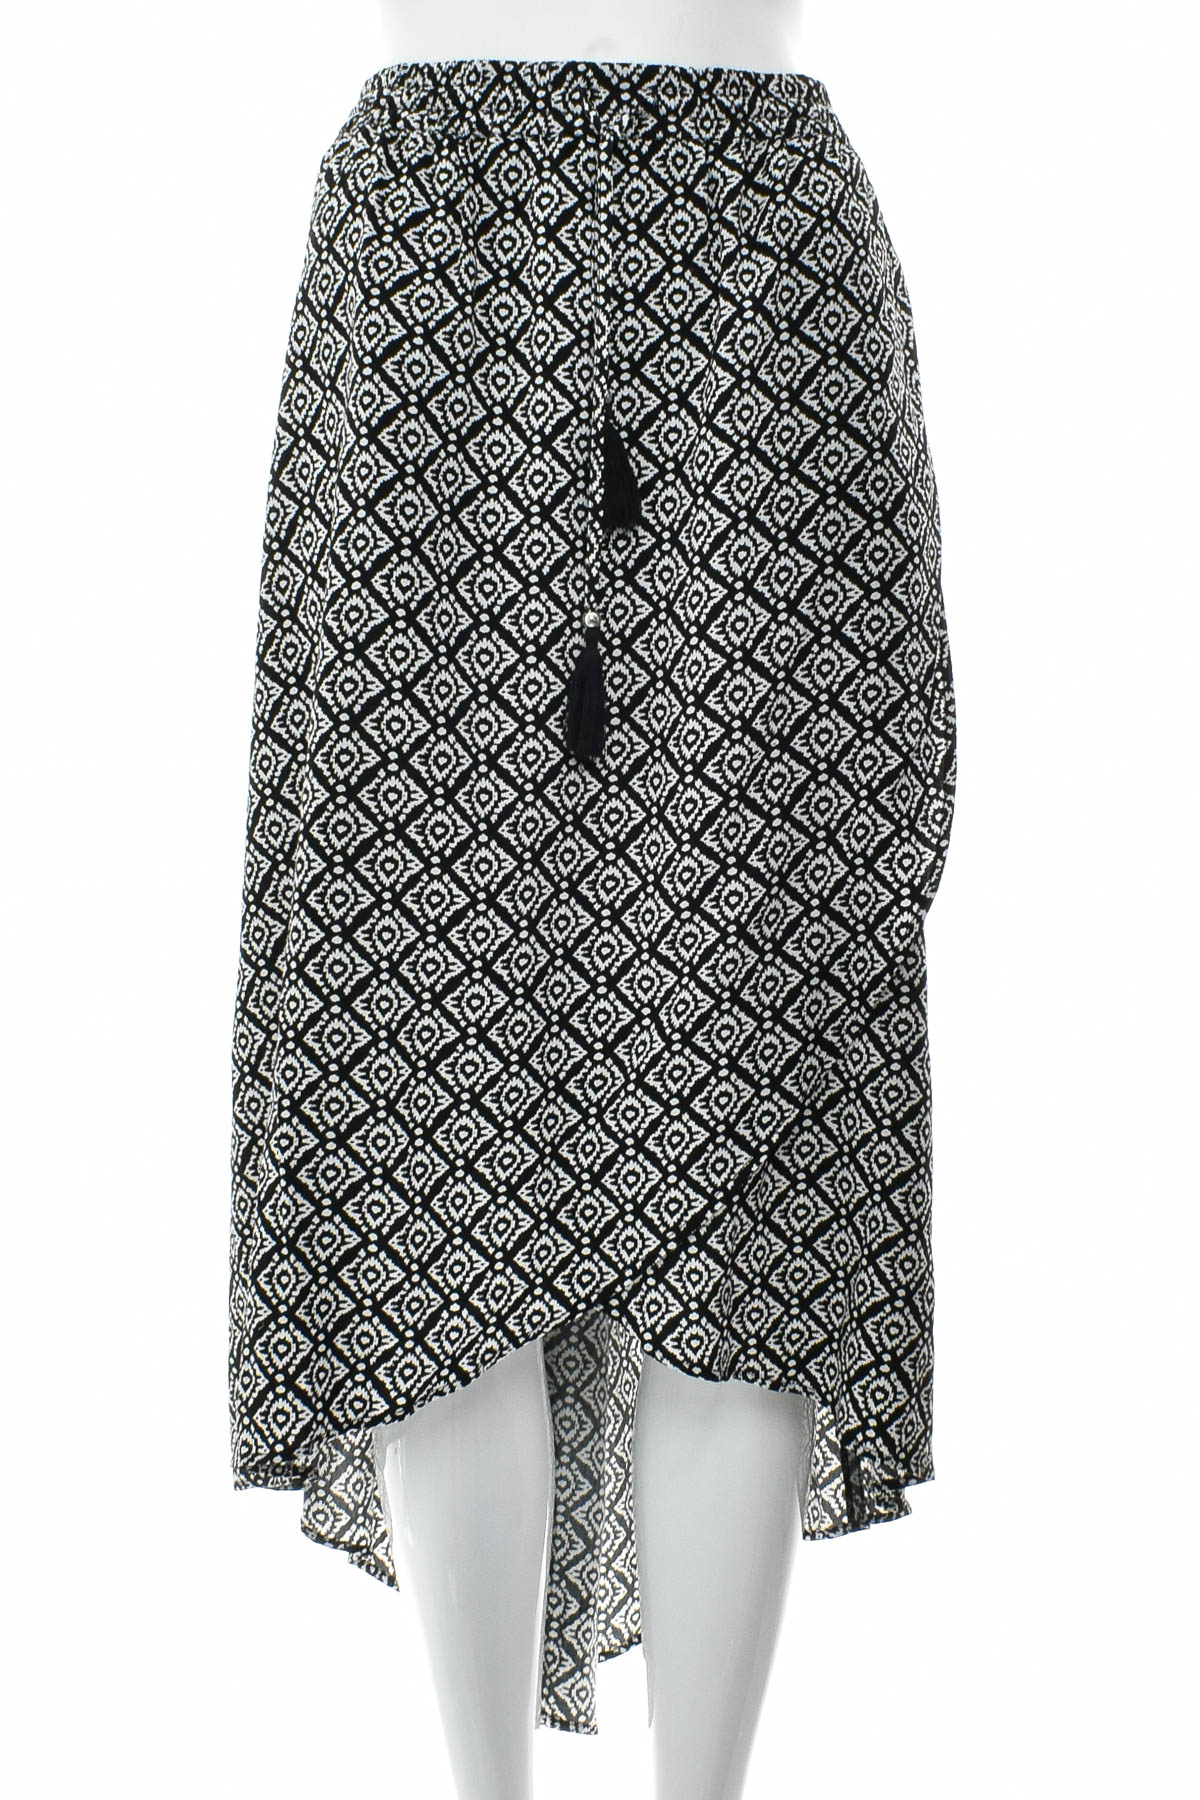 Skirt - Suzannegrae - 0